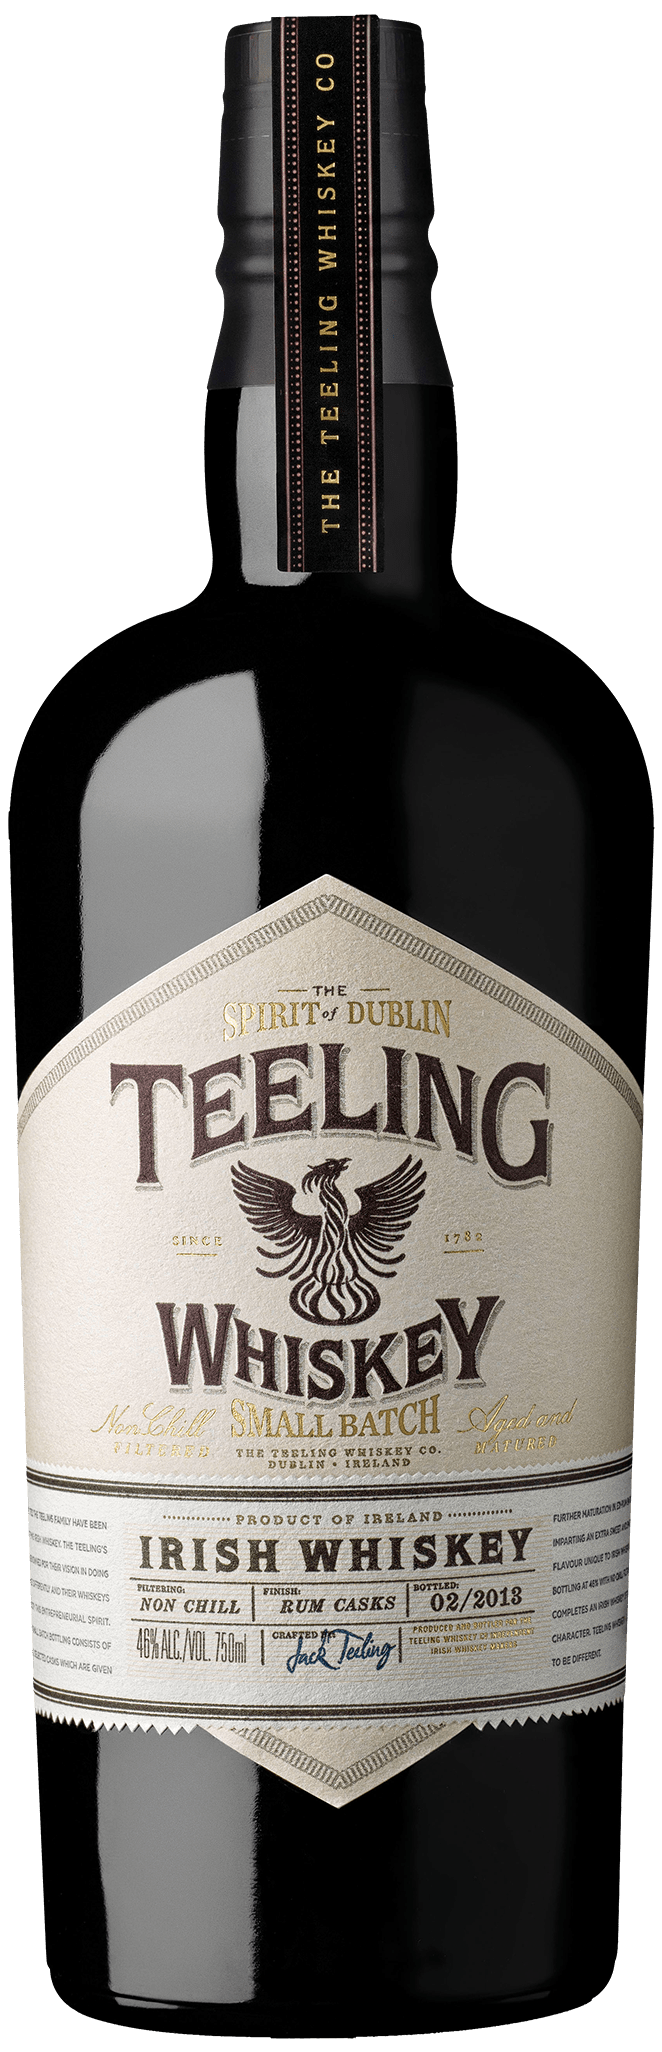 The Teeling Whiskey Co. Small Batch Irish Whiskey